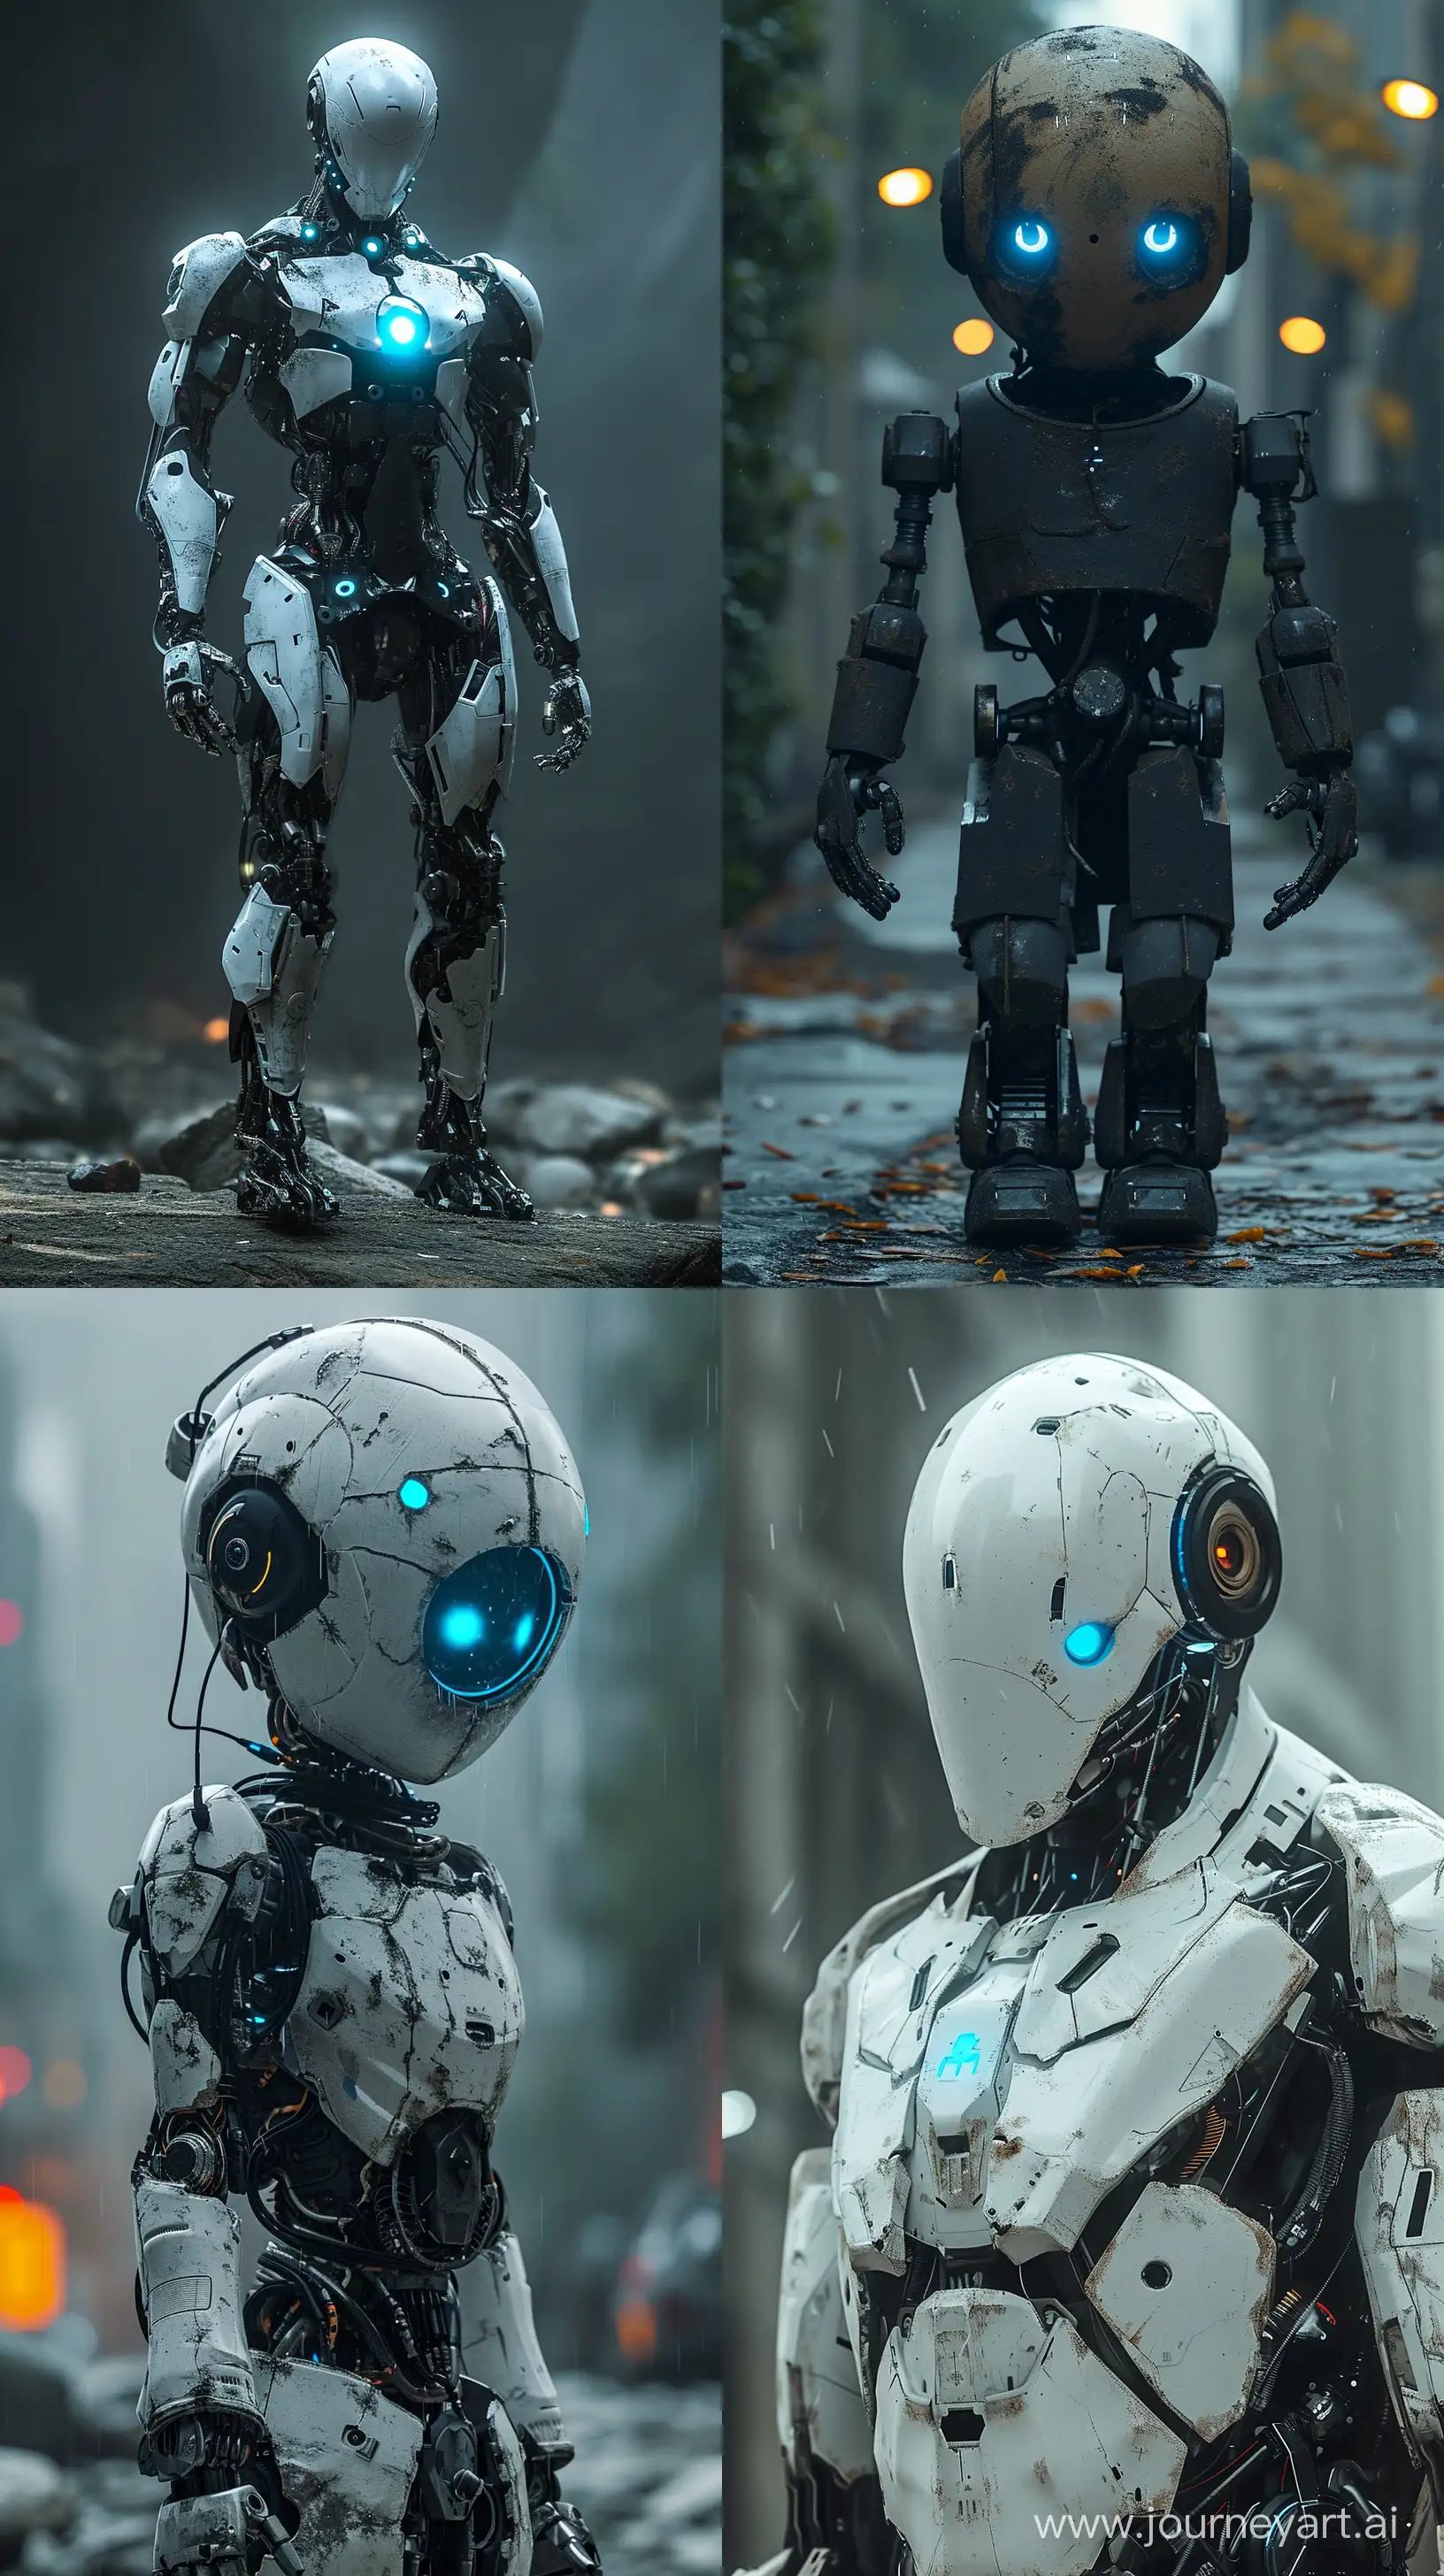 Futuristic-Broken-Robot-in-Captivating-8K-Realism